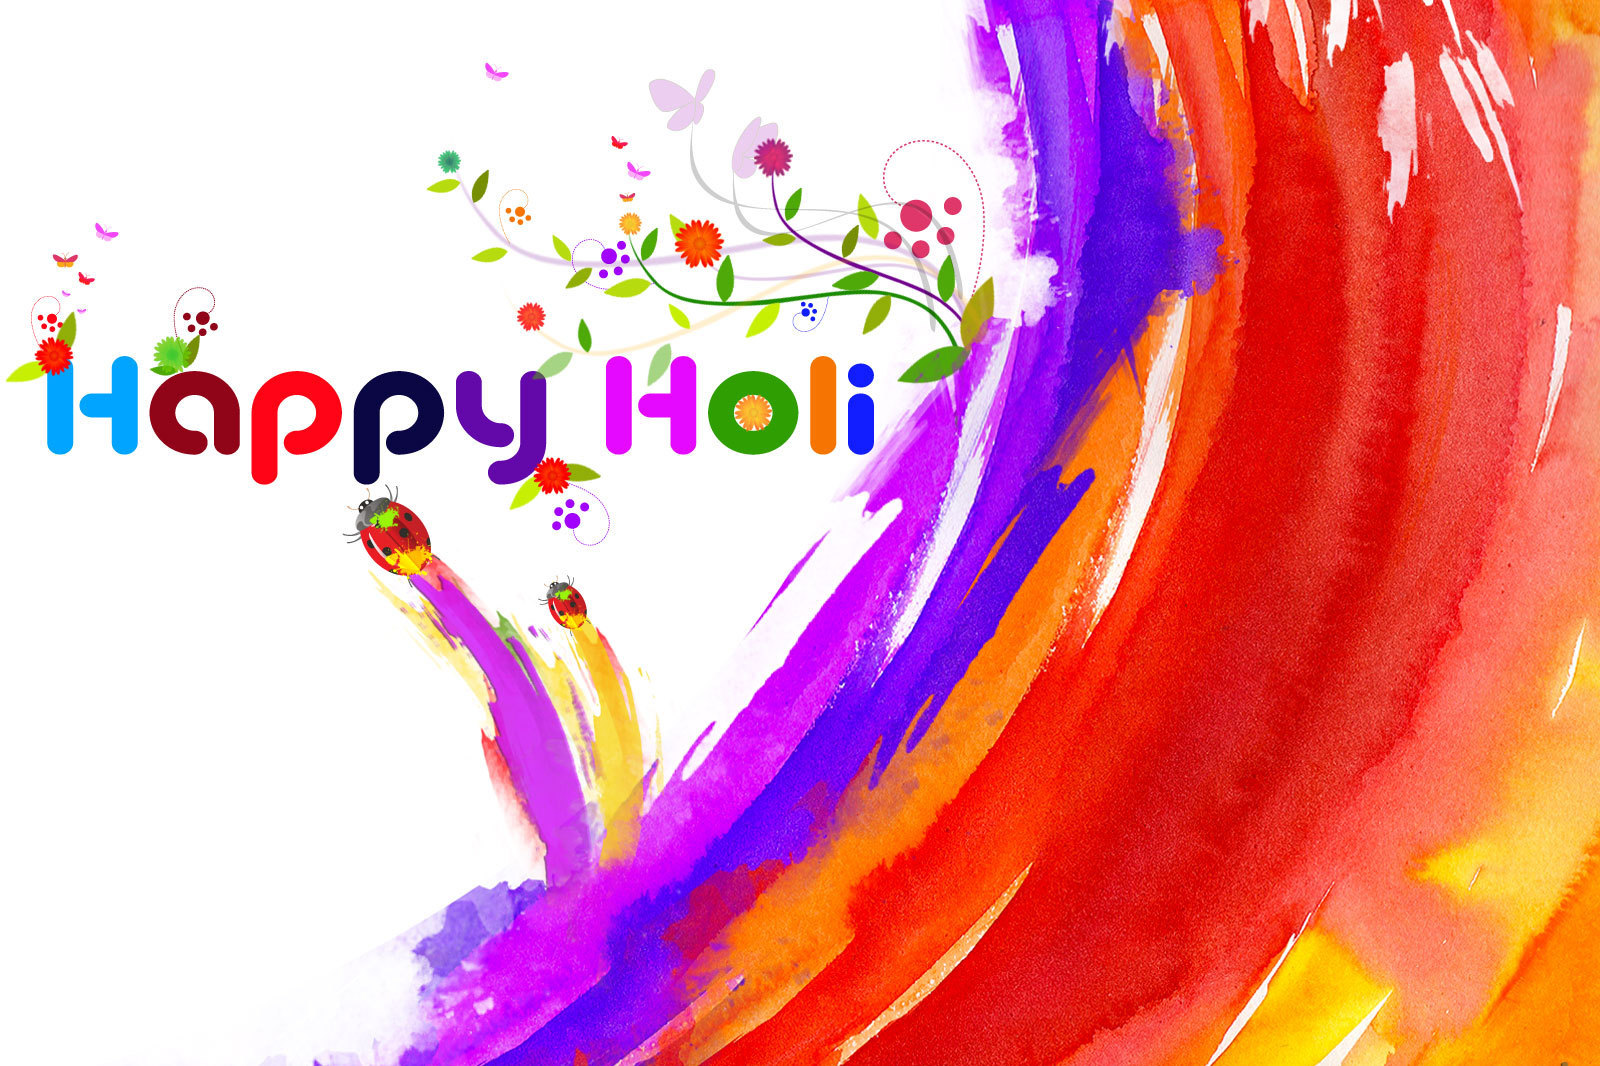 Happy Holi images Happy Holi wallpapers Happy Holi photos Happy Holi hd  Images wallpaper